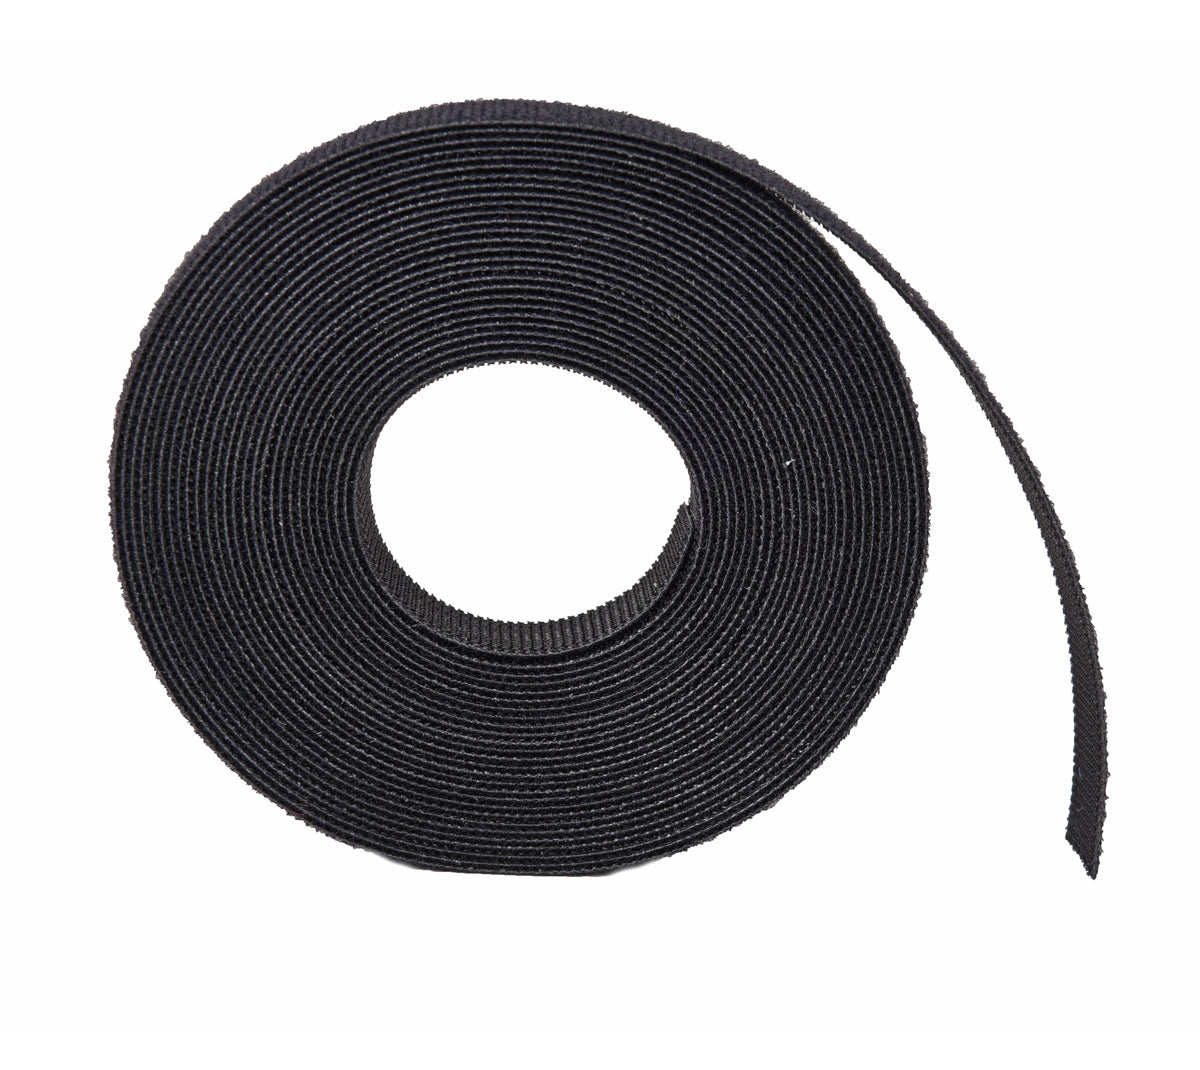 VELCRO® Brand Qwik Tie Straps - 3/4 x 8 Roll- Black or White